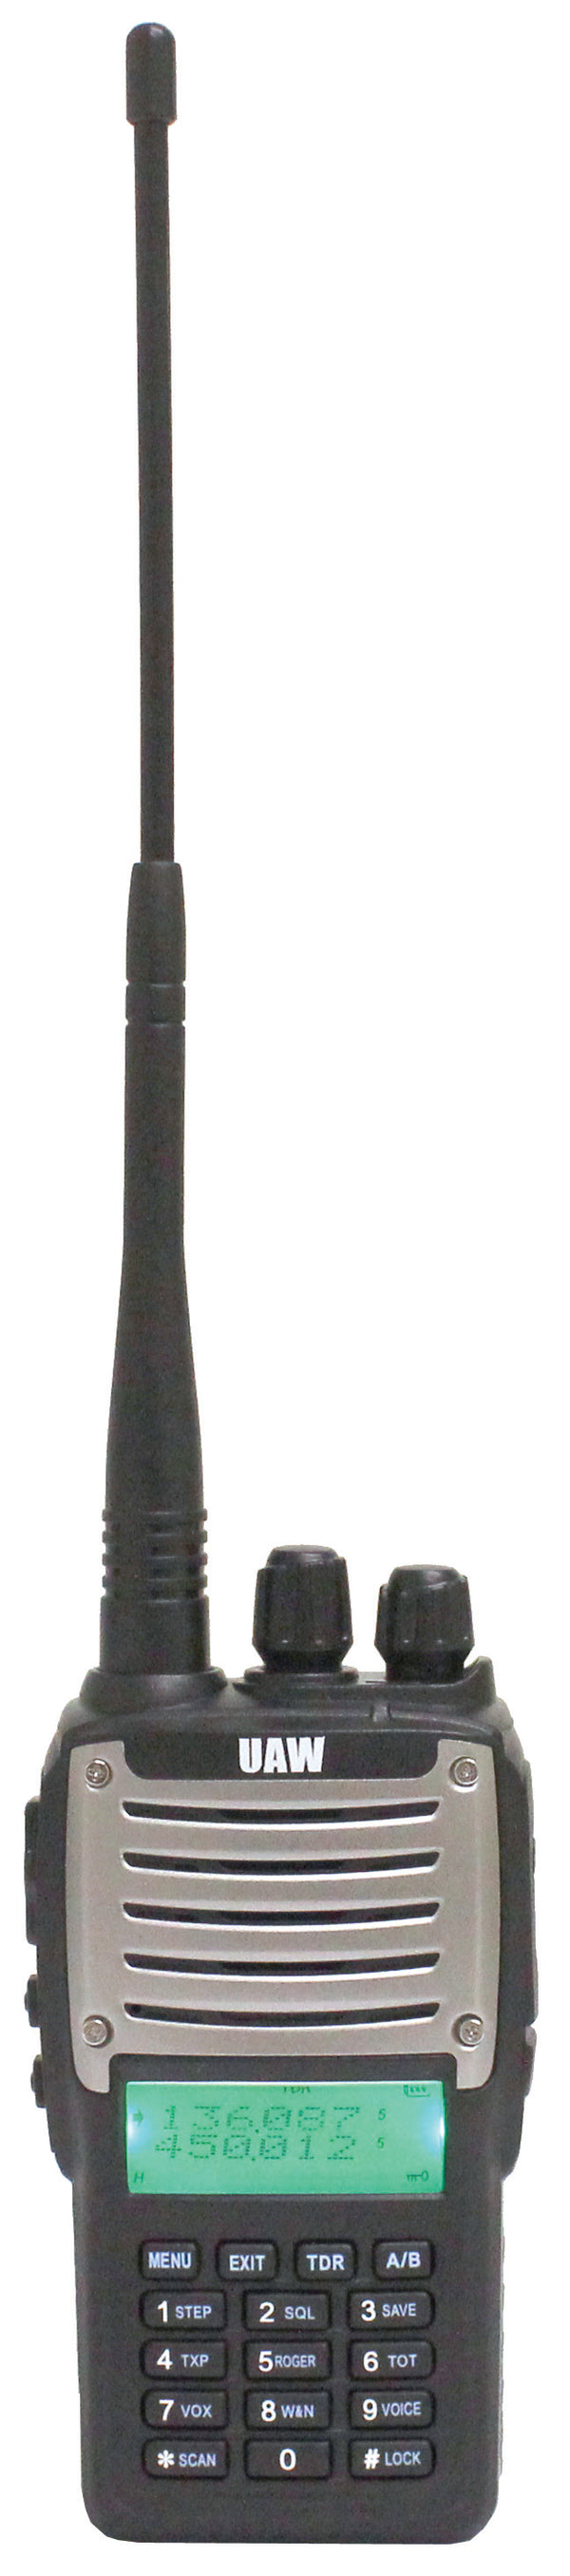 UA600 Professional Dual-Band UHF & VHF Radio